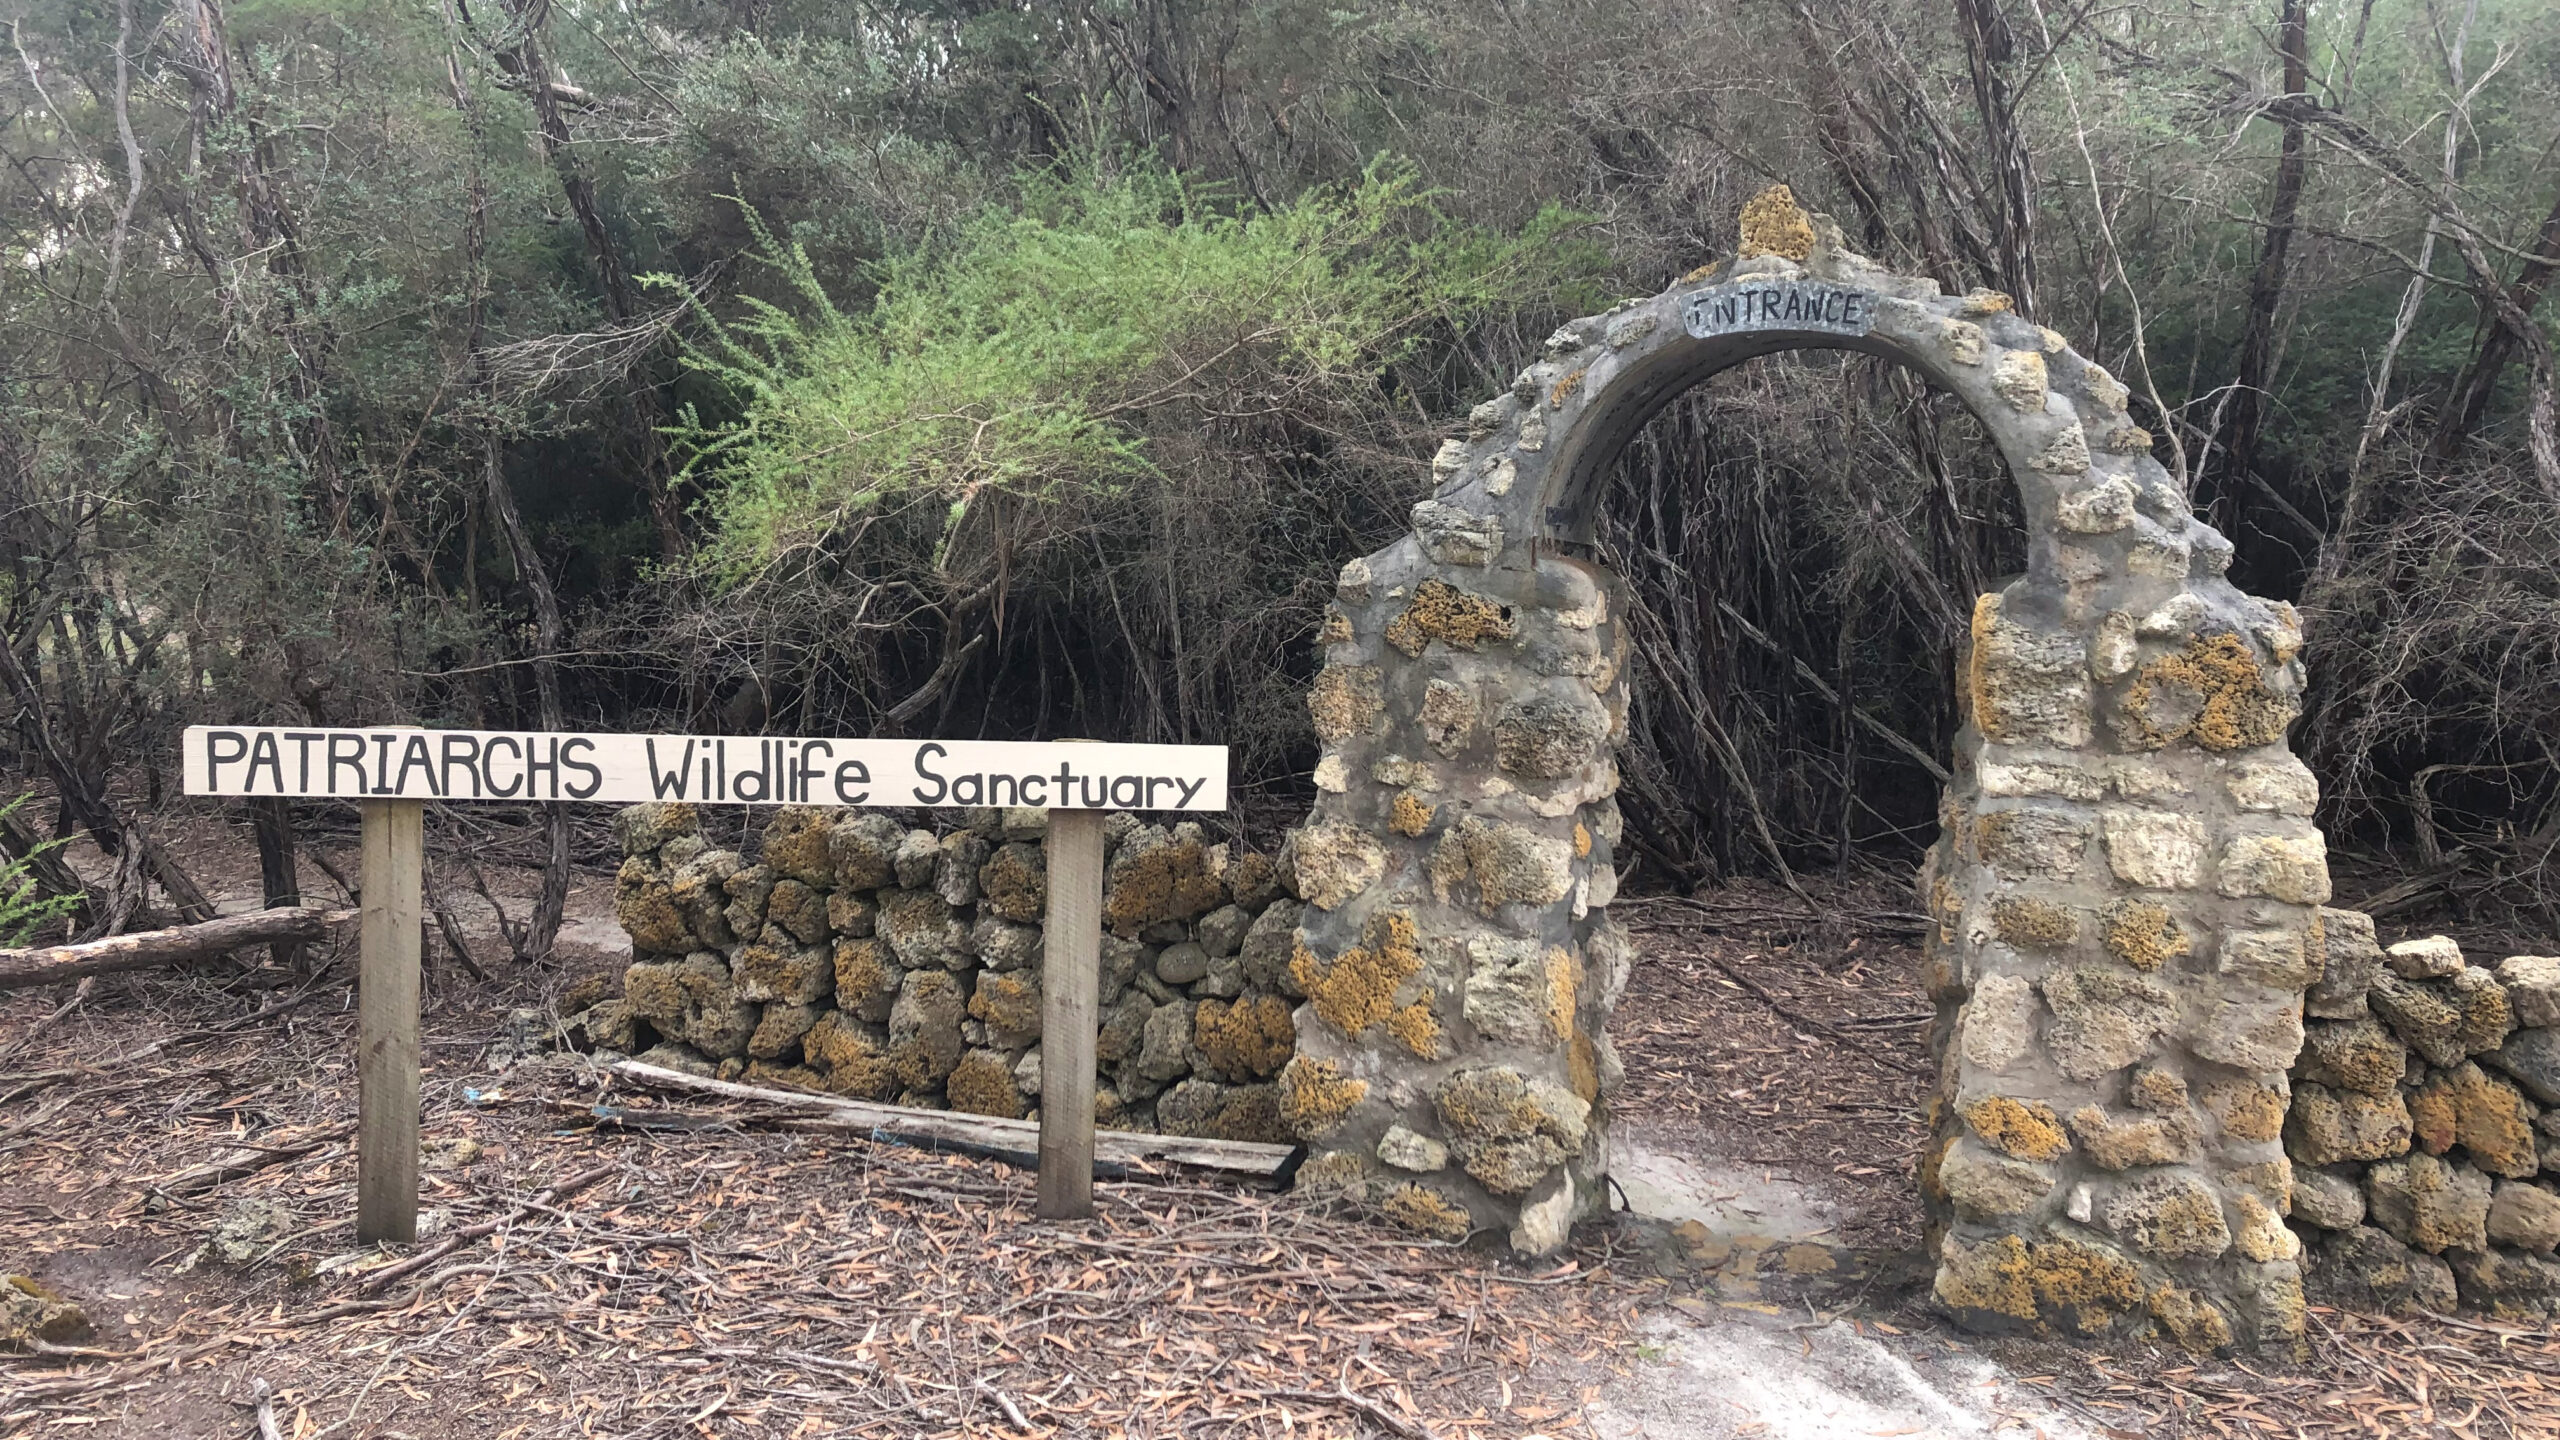 The entrance of the Flinders Island Wildlife sanctuary